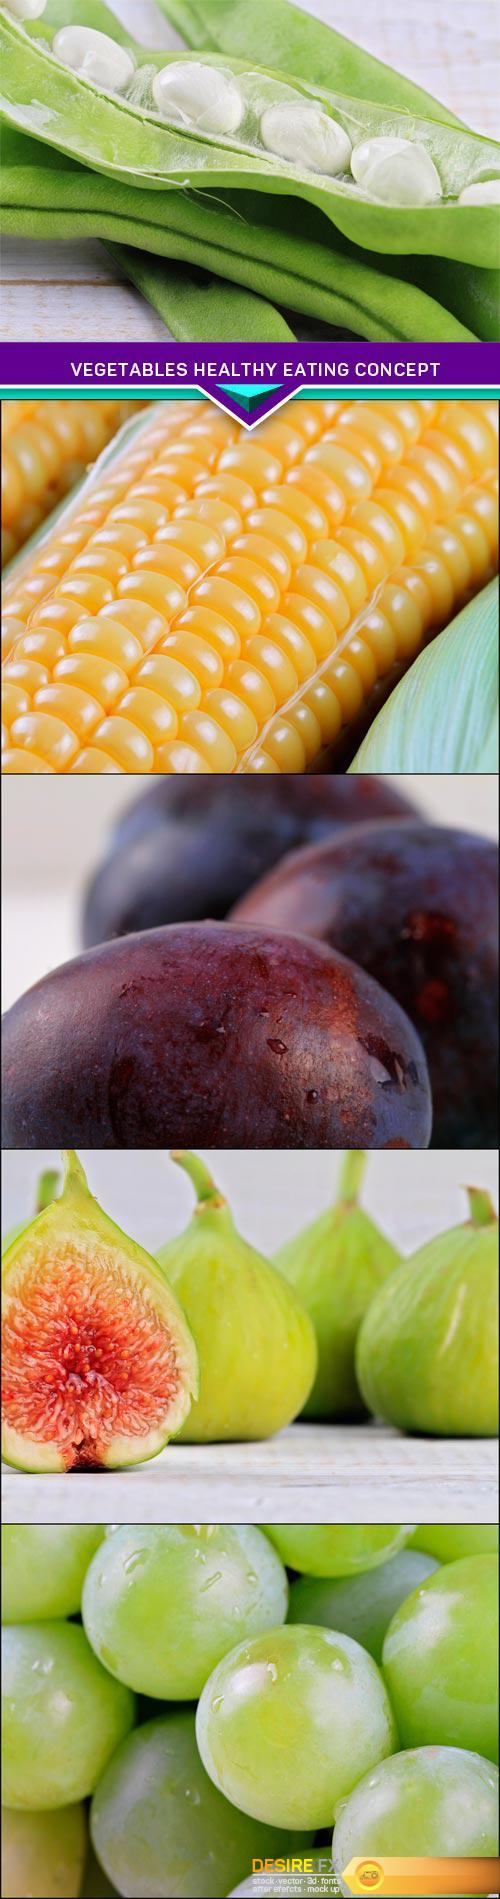 Vegetables Healthy eating concept 5X JPEG